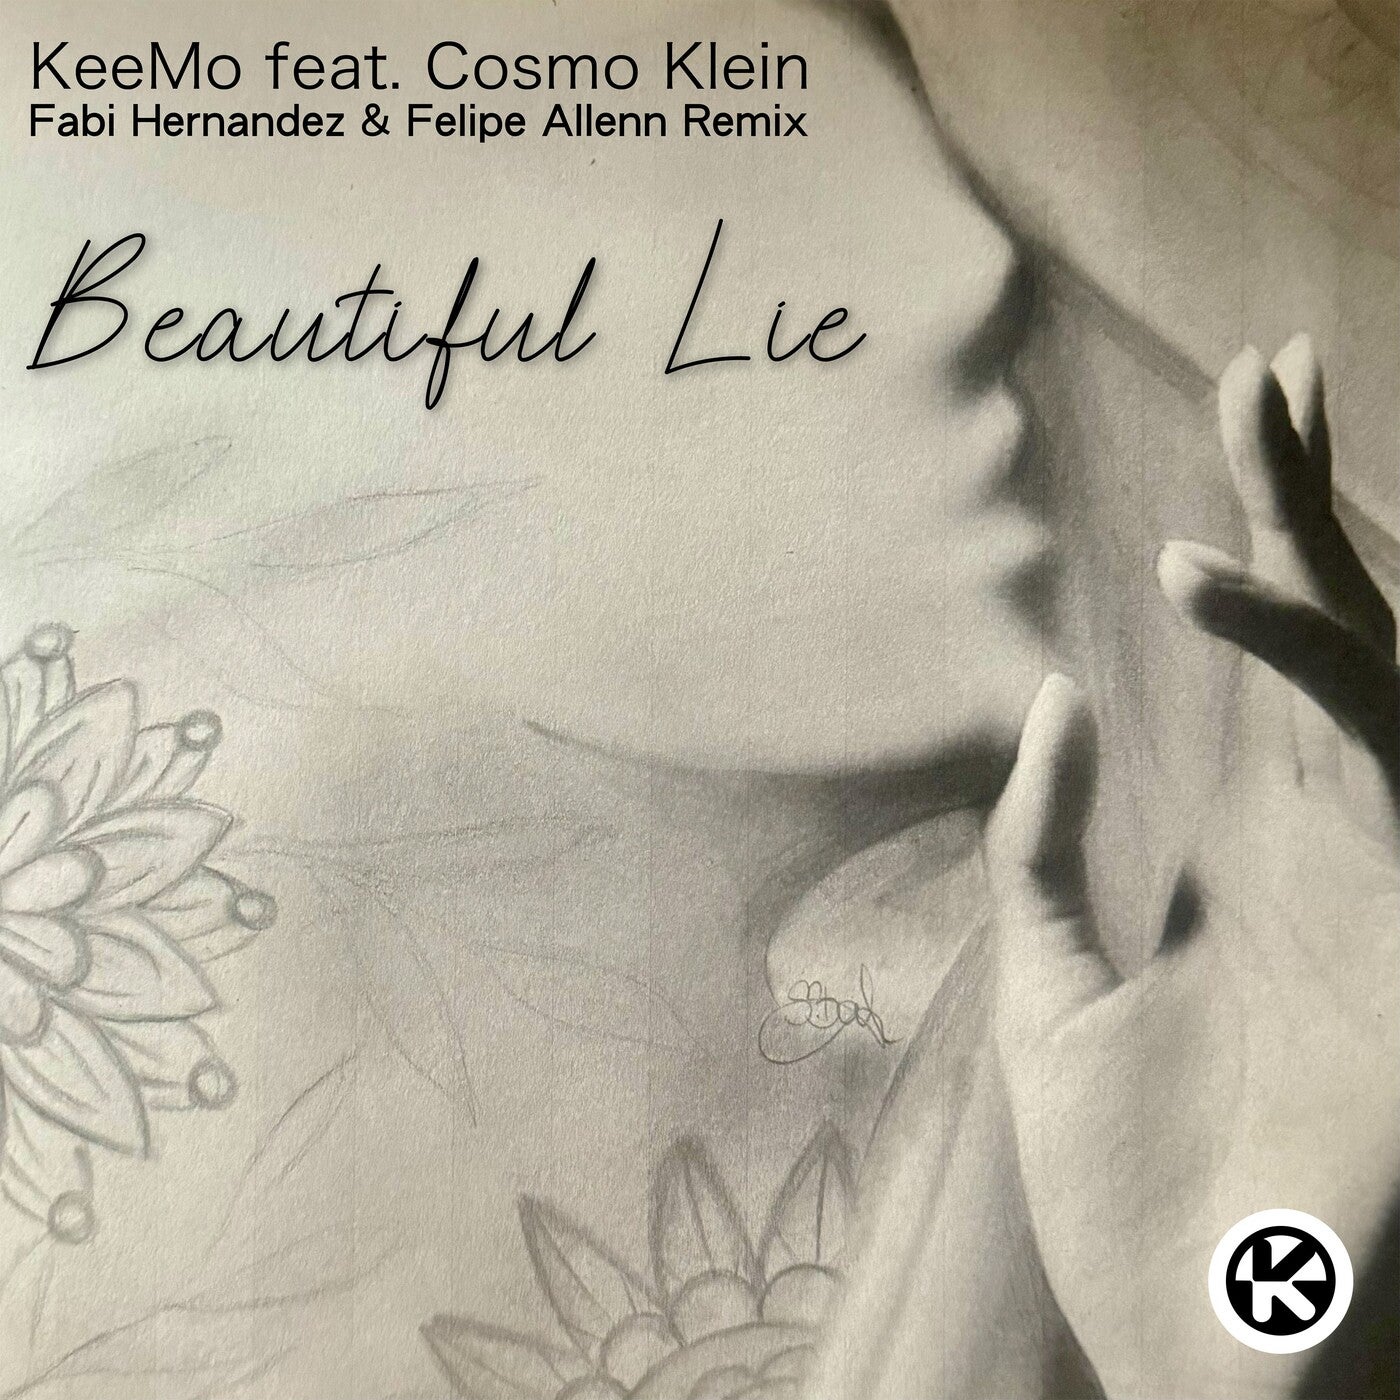 Beautiful Lie (Fabi Hernandez & Felipe Allenn Remix)